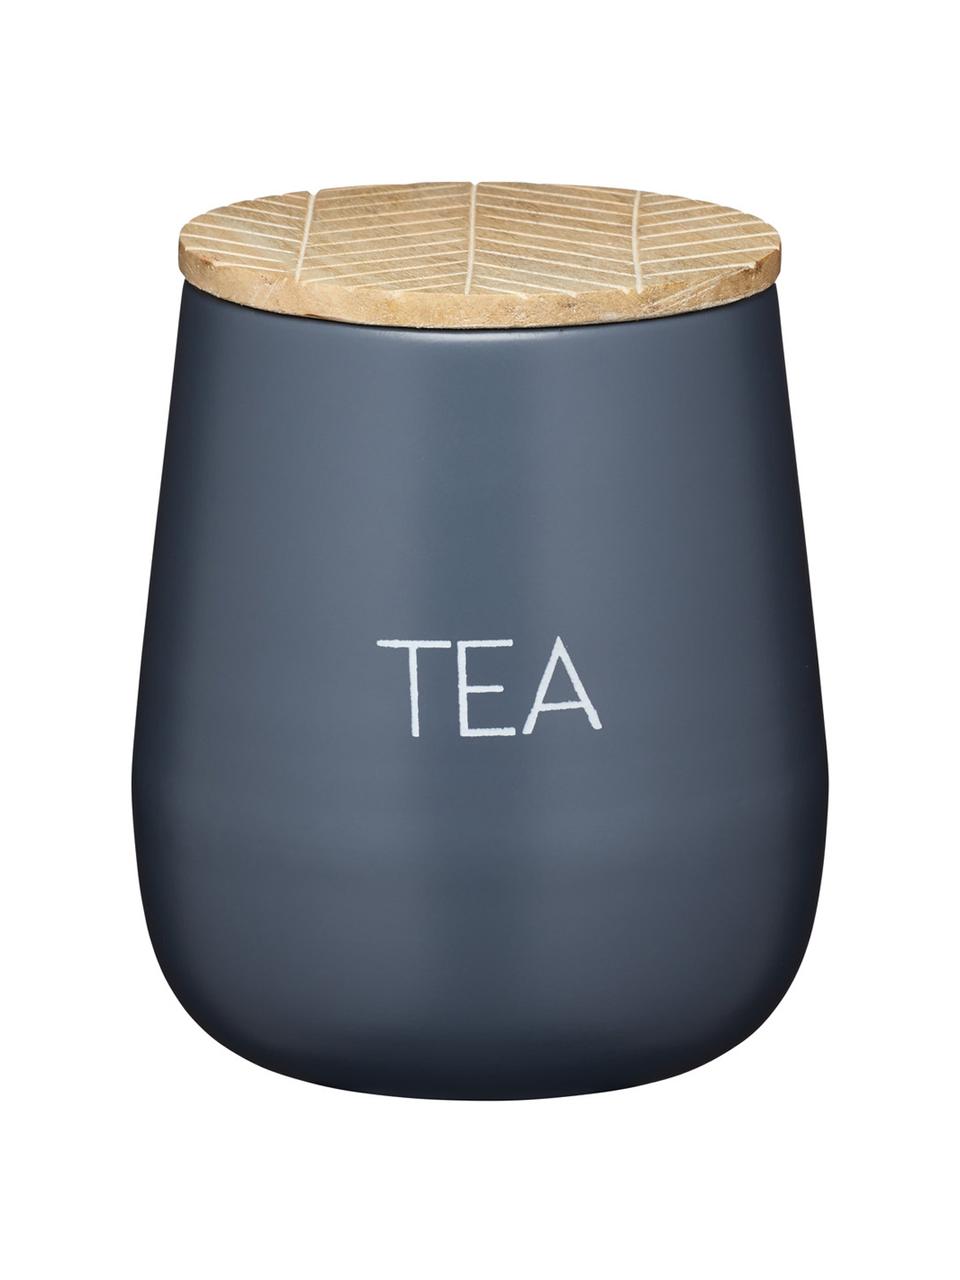 Bote Serenity Tea, Gris antracita, madera, Ø 13 x Al 15 cm, 1,6 L